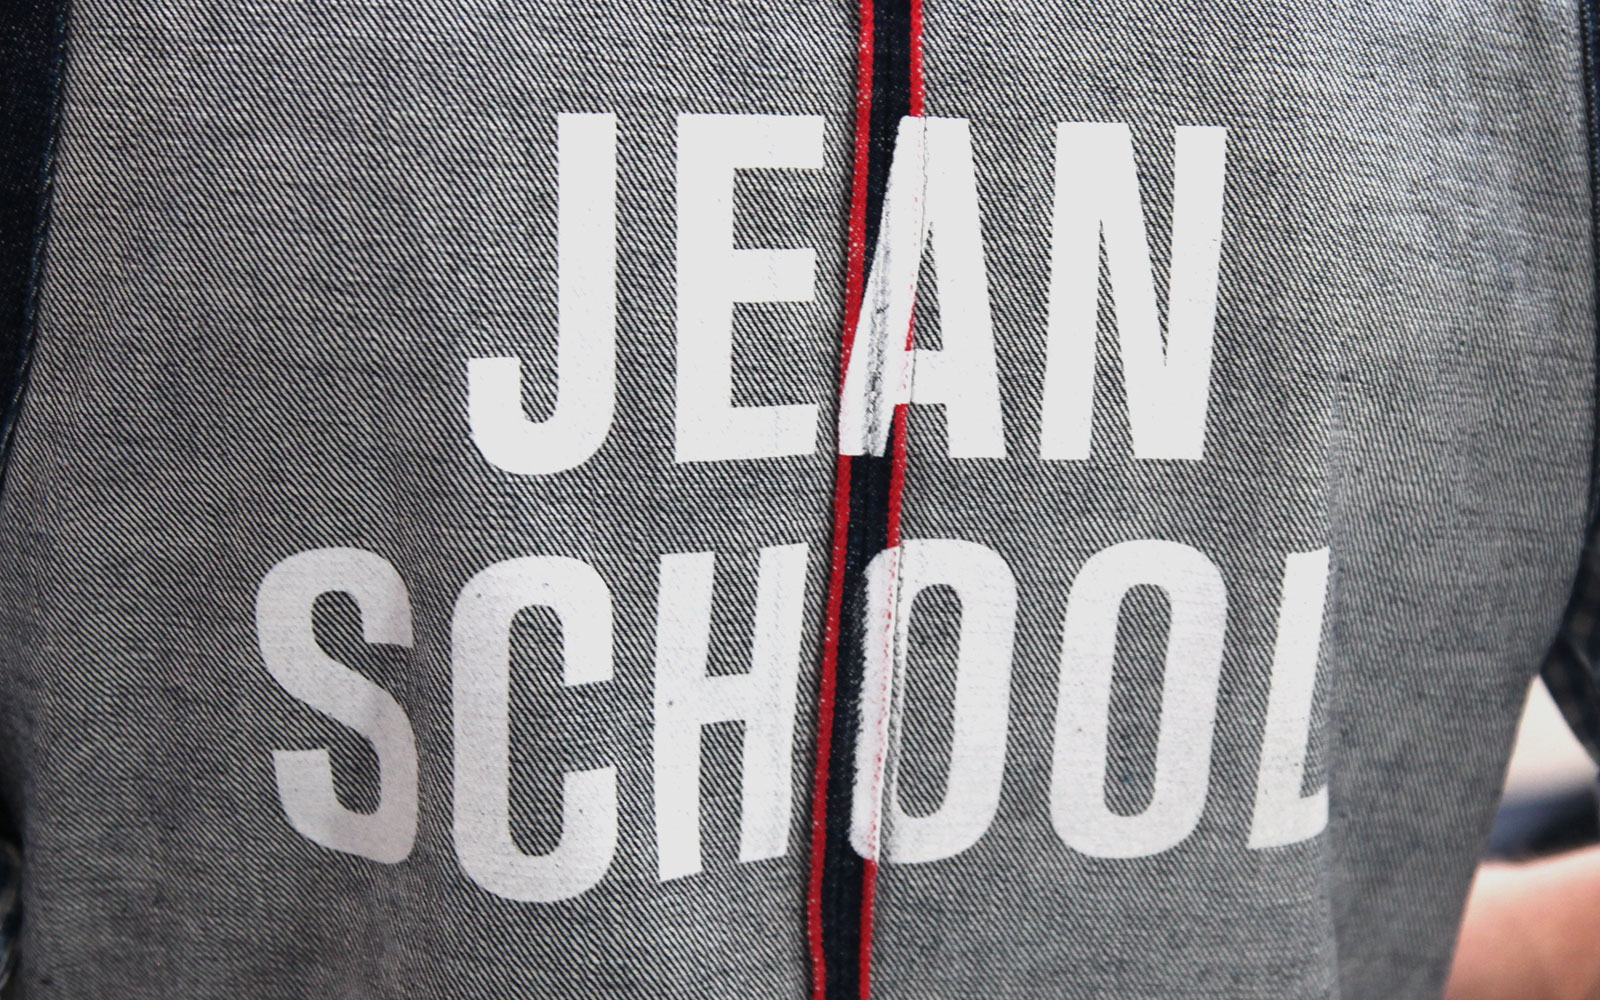 Jean School, Amsterdam